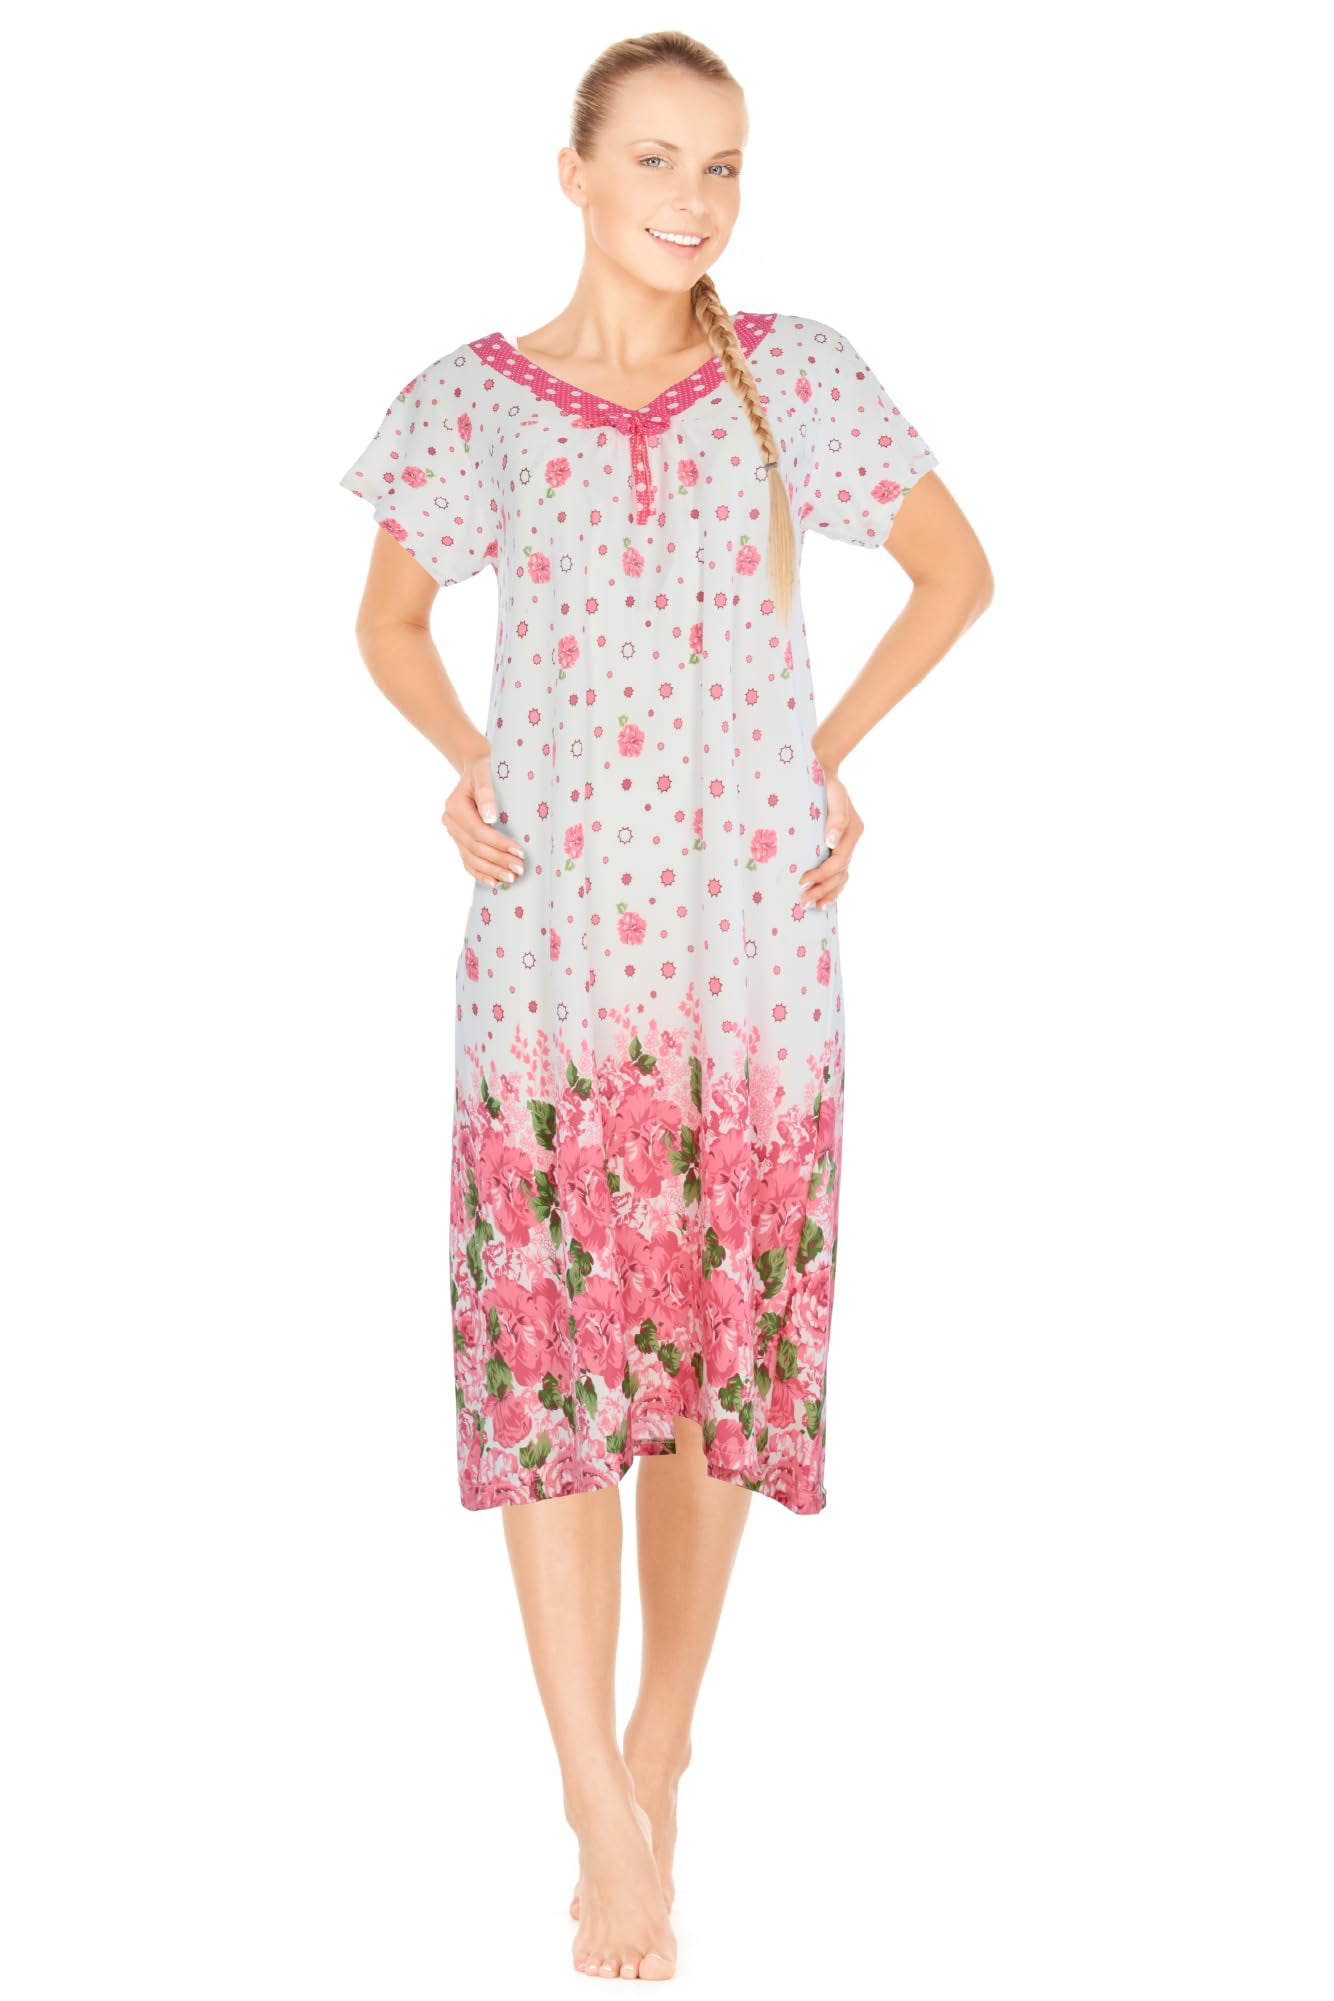 JEFFRICO Womens Nightgowns Sleepwear Soft Pajama Dress Nightshirts Plus ...